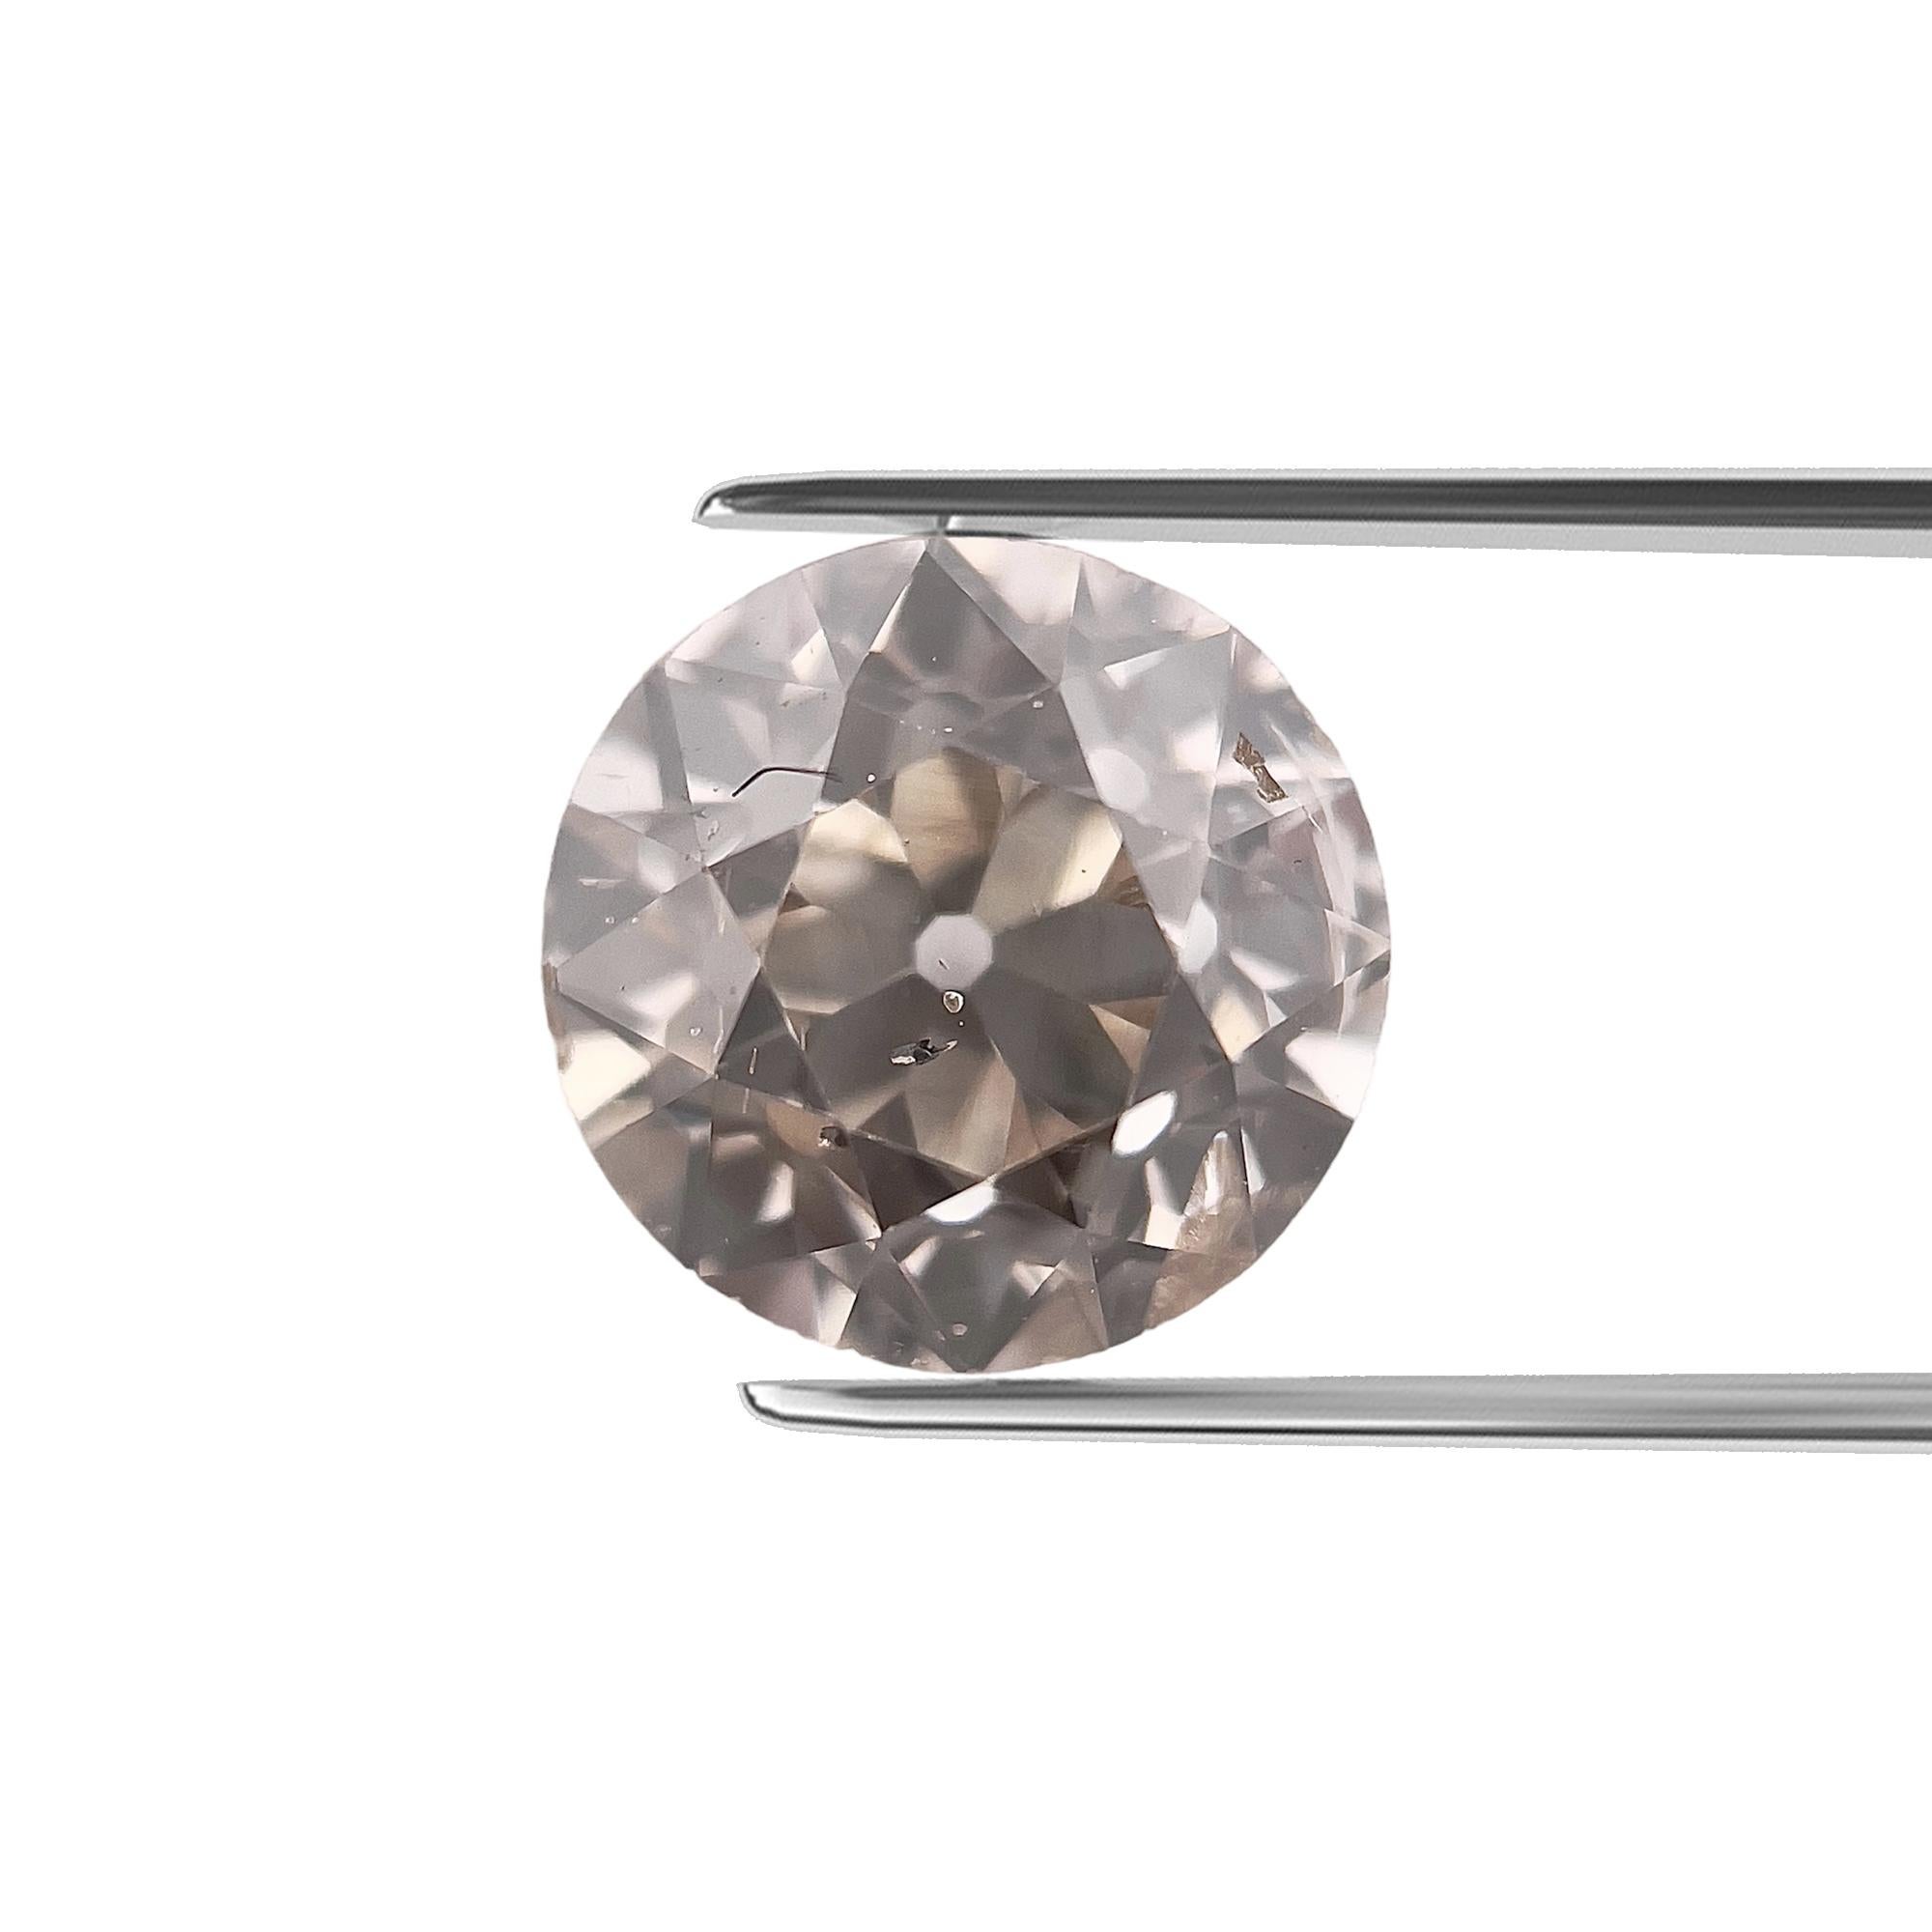 ITEM DESCRIPTION

ID #: NYC55475
Stone Shape: CIRCULAR BRILLIANT
Diamond Weight: 0.83ct
Clarity: I1
Color: Q to R Range, Very Light Brown
Cut:	Excellent
Measurements: 5.80 - 5.90 x 3.78 mm
Depth %:	64.5%
Table %:	49%
Symmetry: Fair
Polish: Very